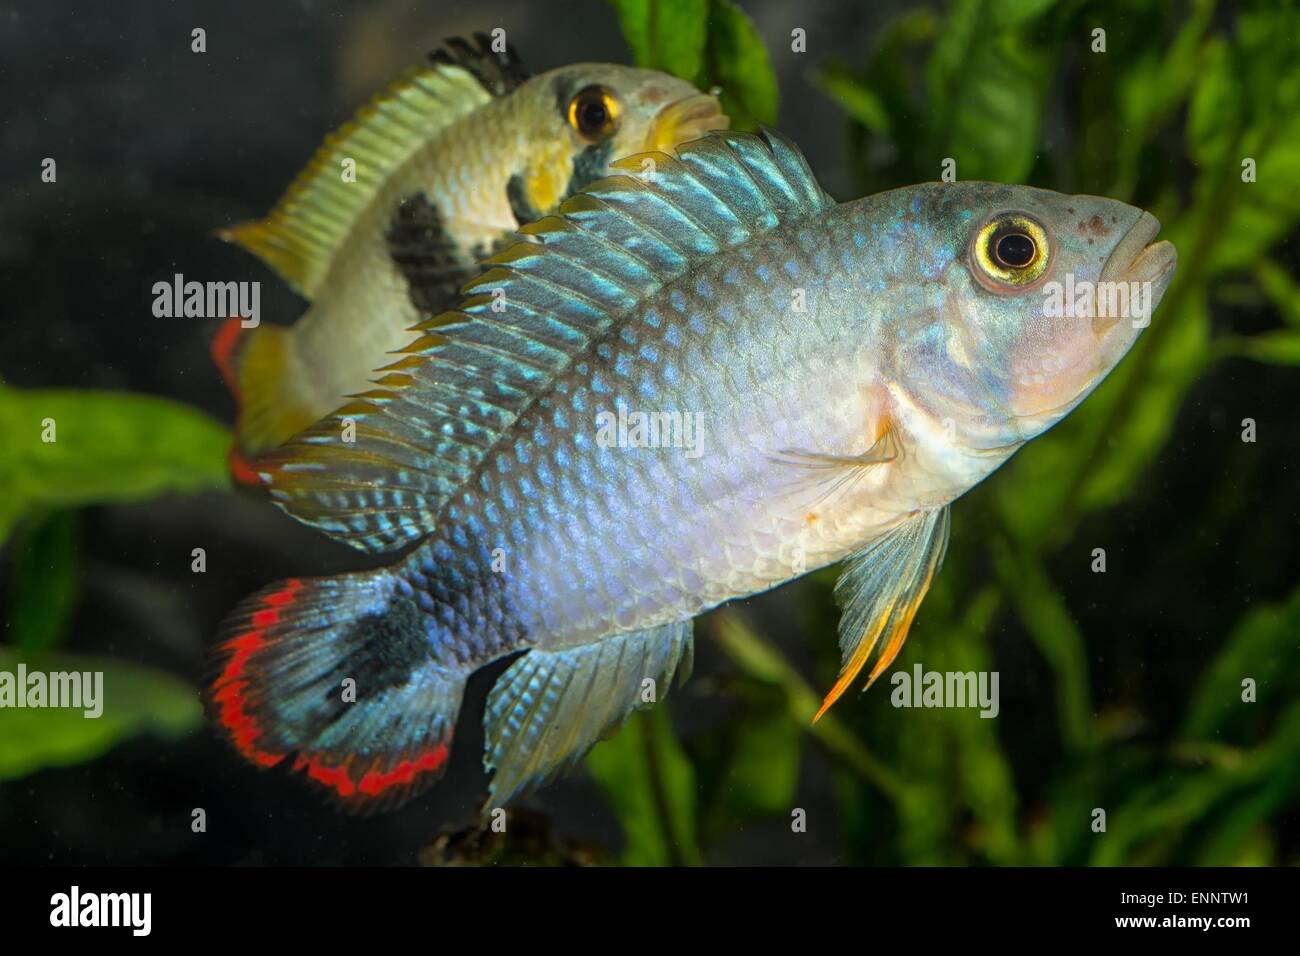 Tropical freshwater aquarium fish from genus Apistogramma. Stock Photo